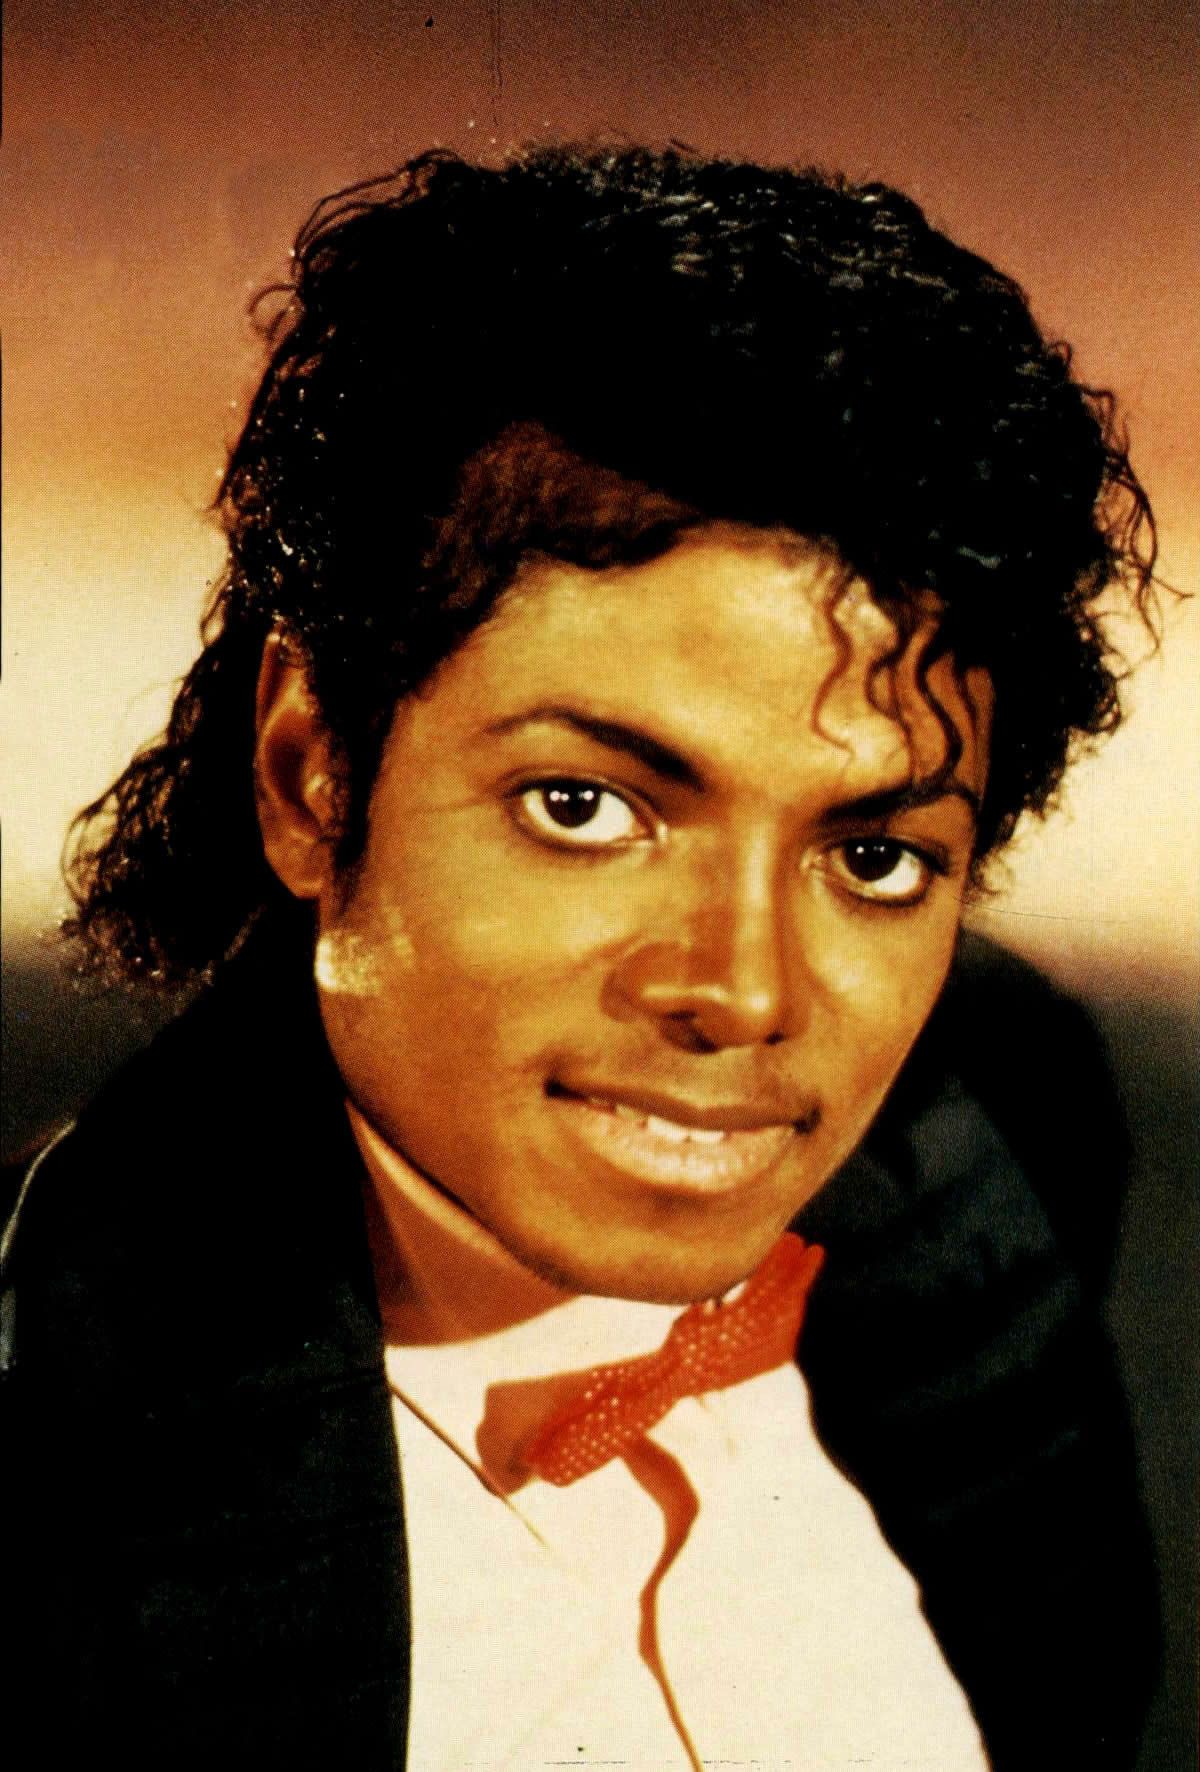 1200x1772px Michael Jackson Billie Jean (292.88 KB).04.2015